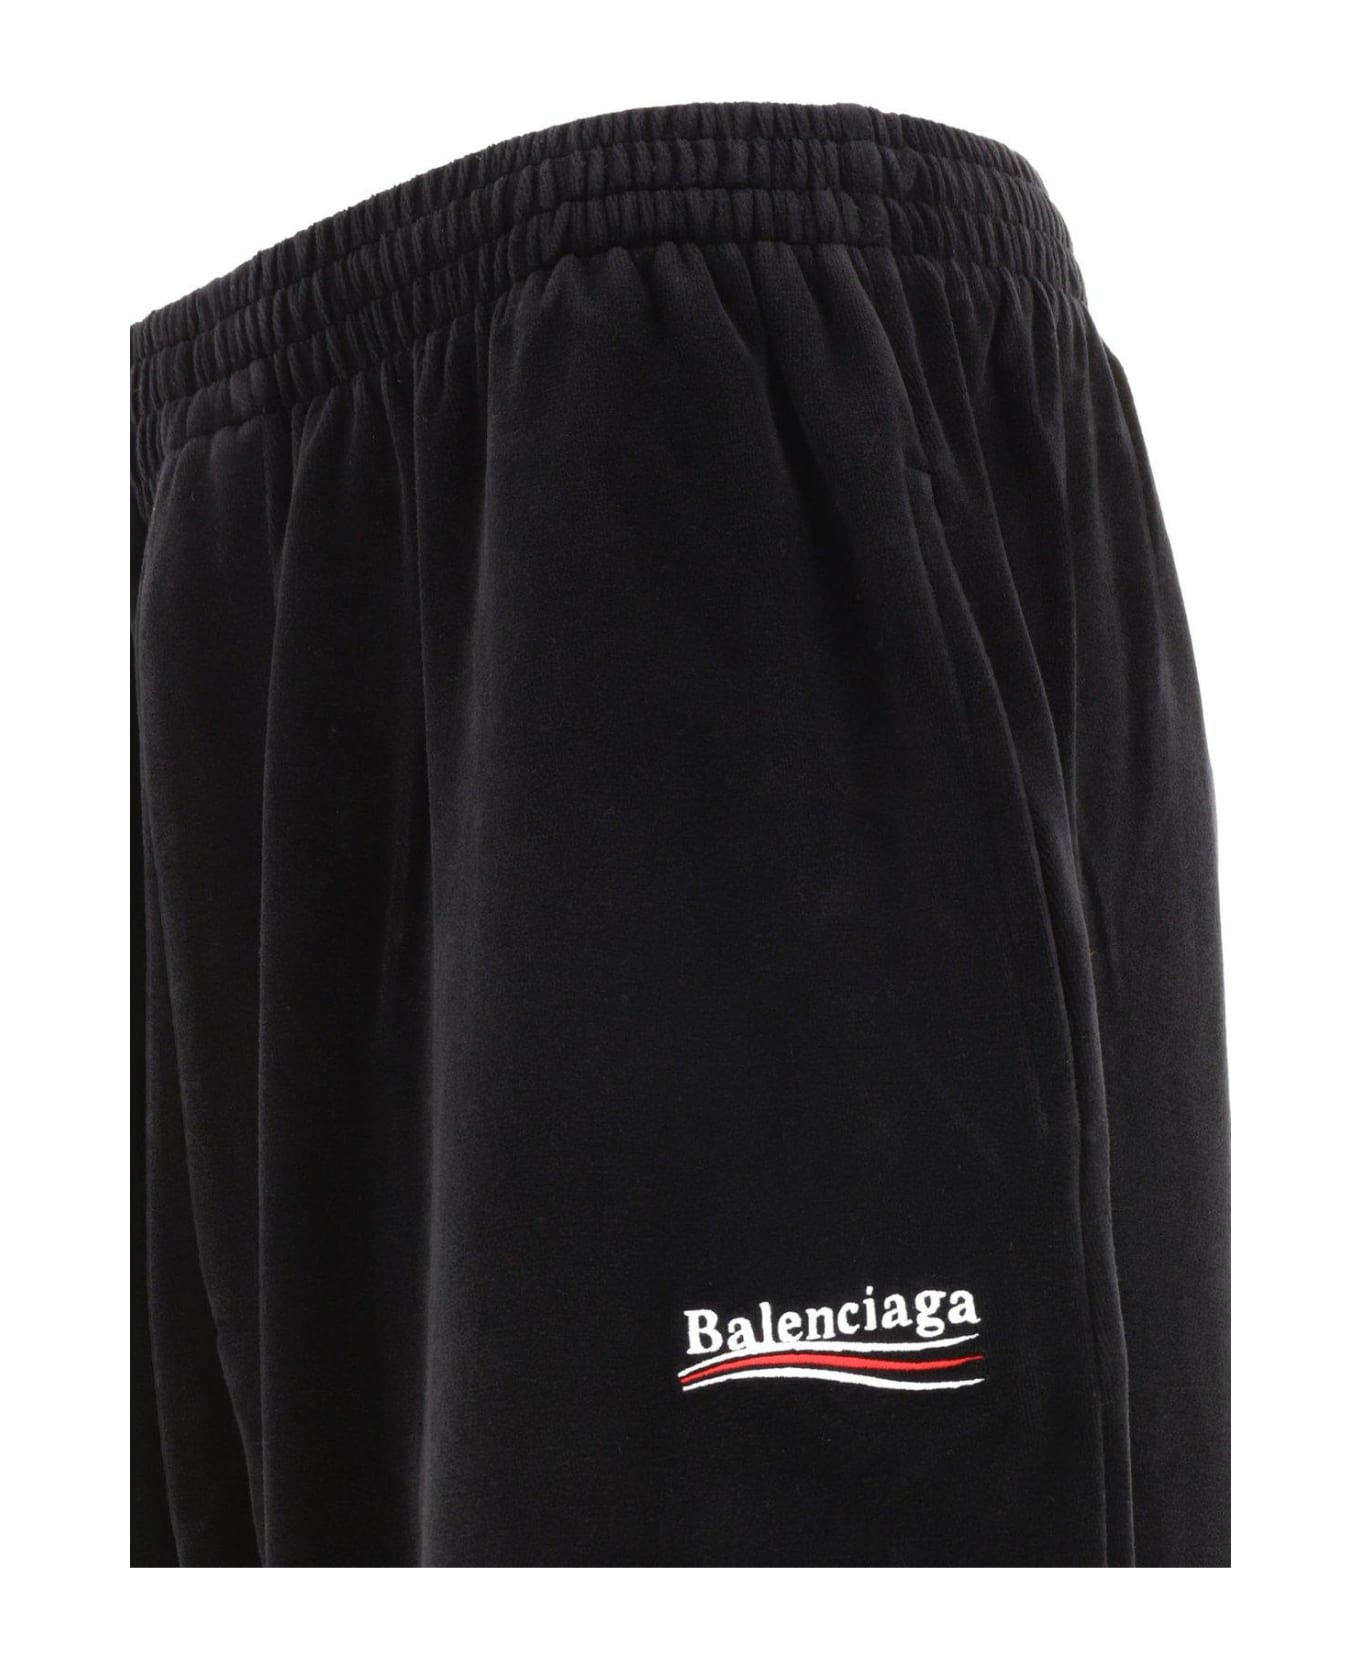 Balenciaga Logo Embroidered Track Pants - Black/white ボトムス